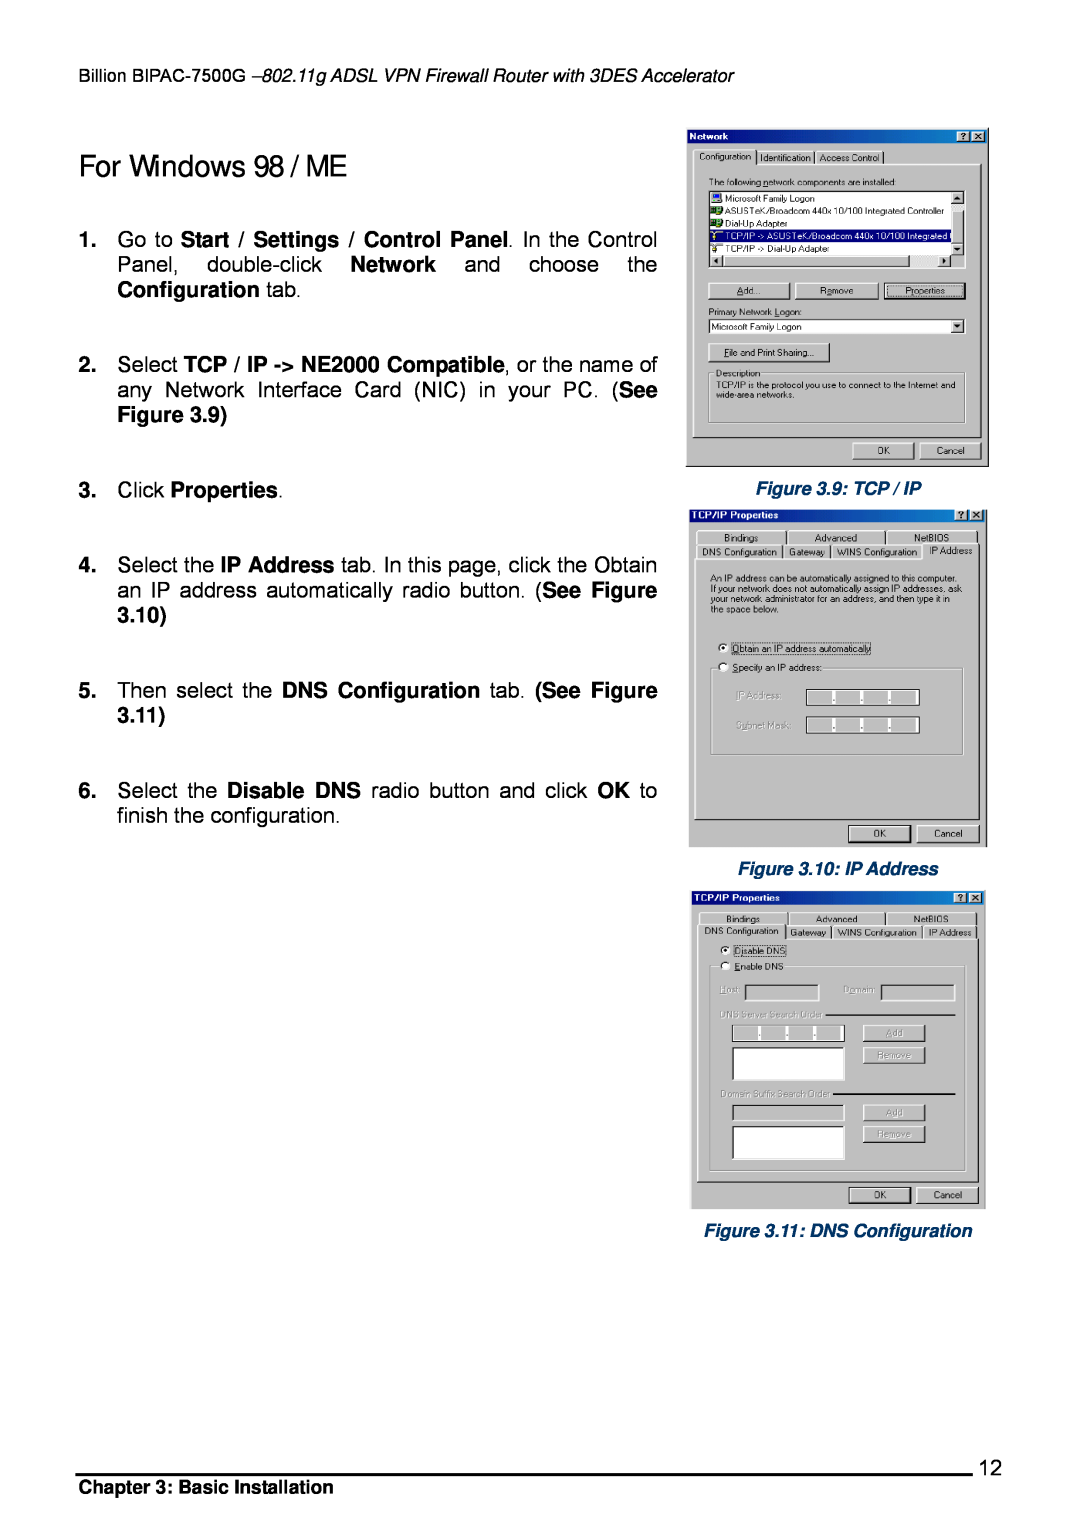 Billion Electric Company BIPAC-7500G user manual For Windows 98 / ME, Click Properties 